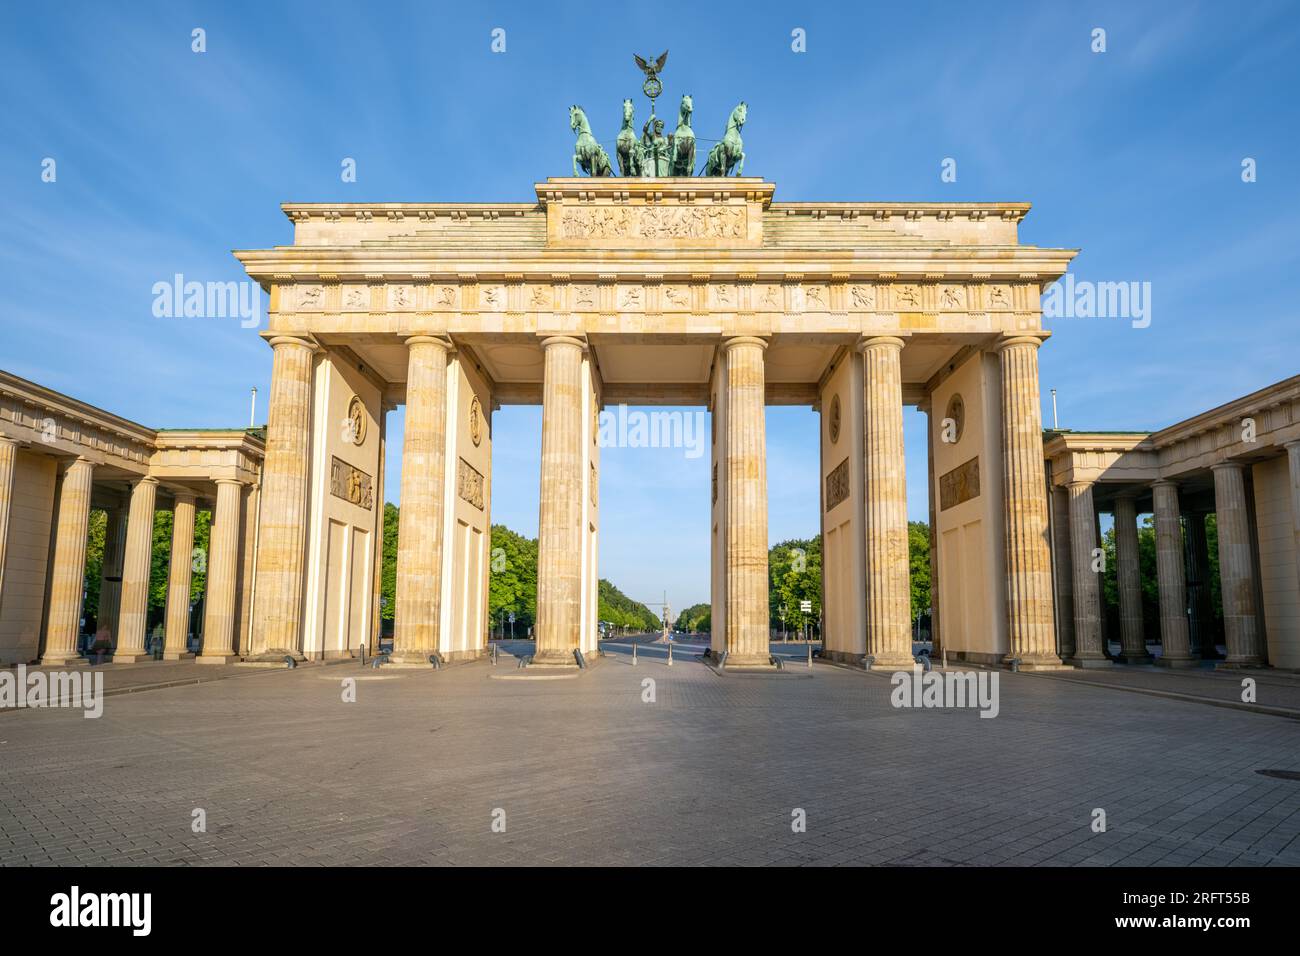 Megapixel image of the famous Brandenburg Gate in Berlin, Germany Stock Photo